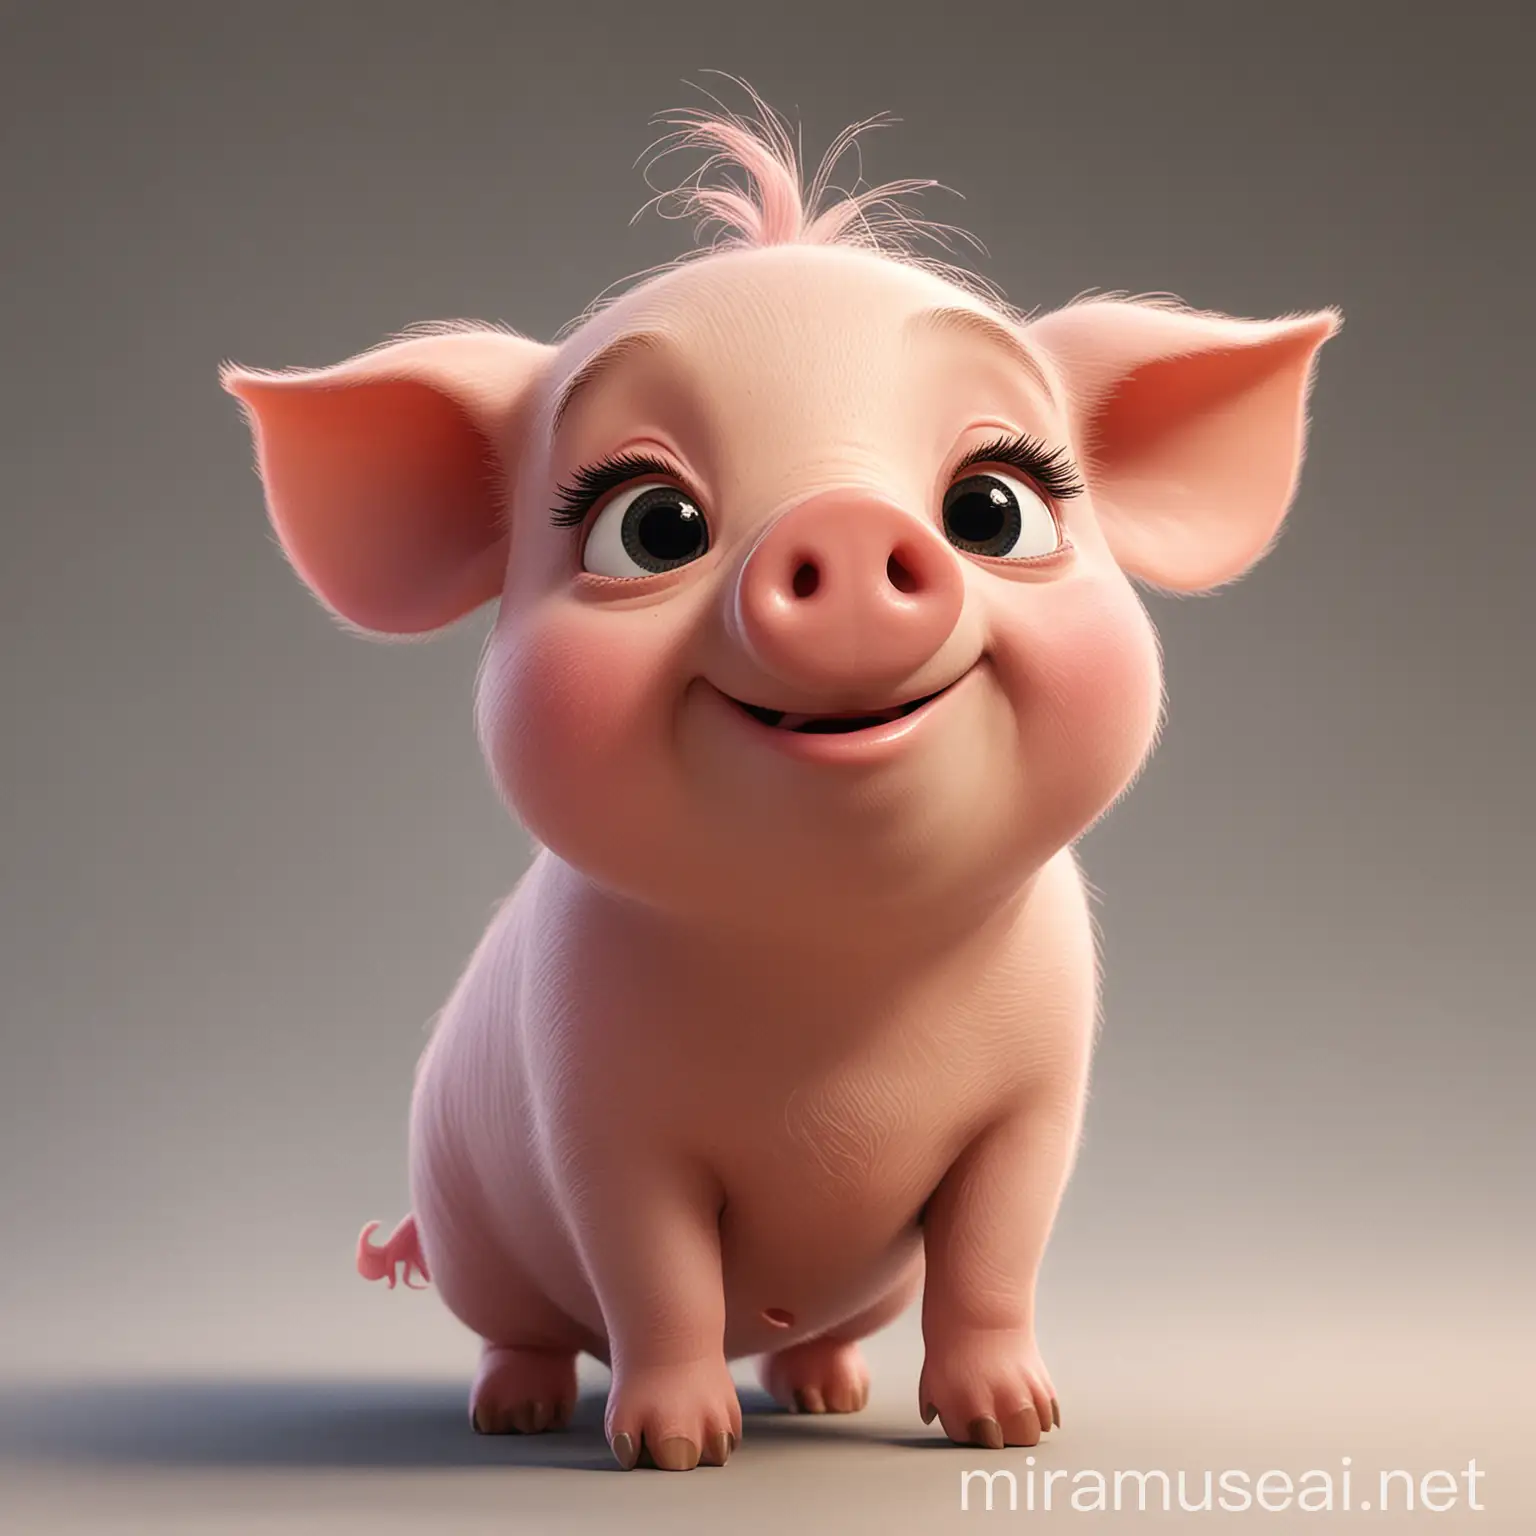 Adorable Piglet in Disney Pixar Style Illustration